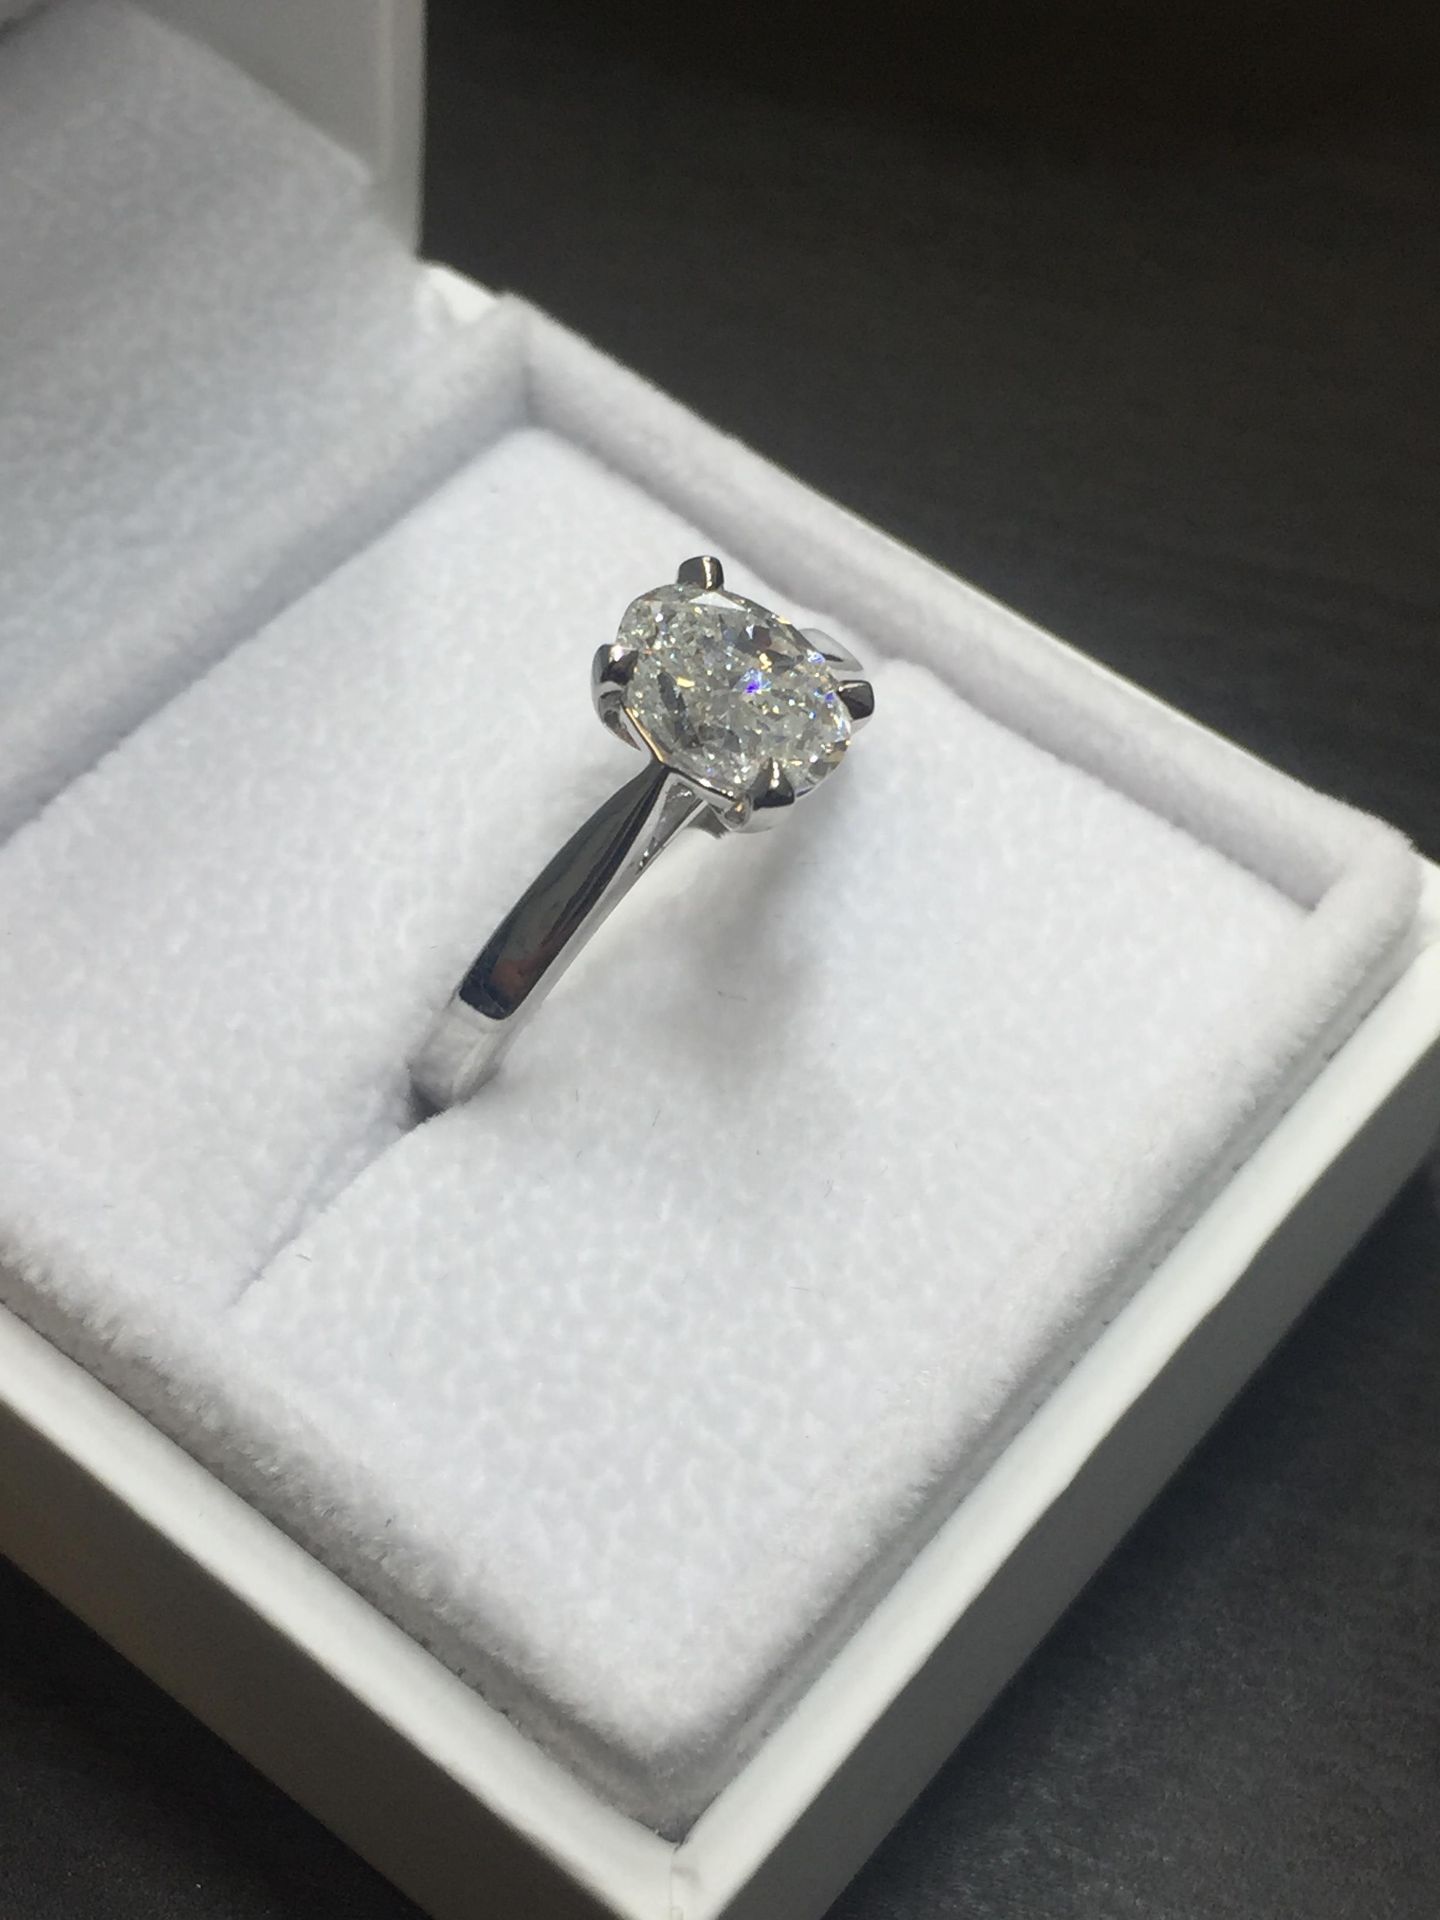 1.20ct Oval cut diamond ,F colour si2 clarity,4 claw platinum setting ,IGI certification 239675312, - Image 2 of 4